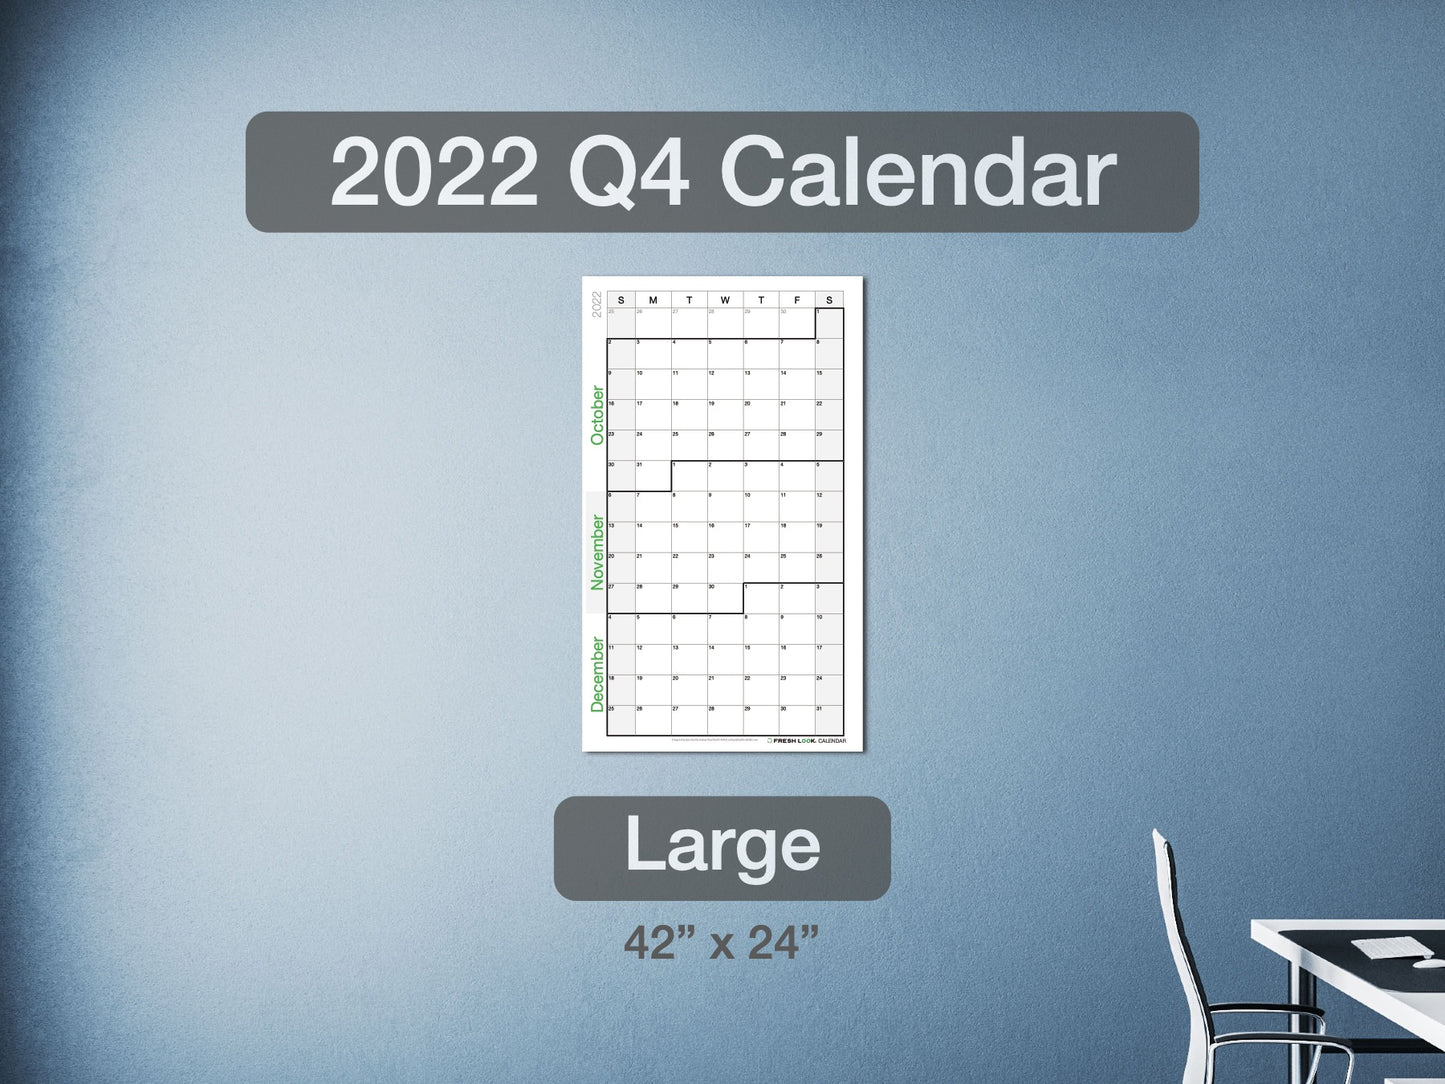 2022 Q4 Calendar Large